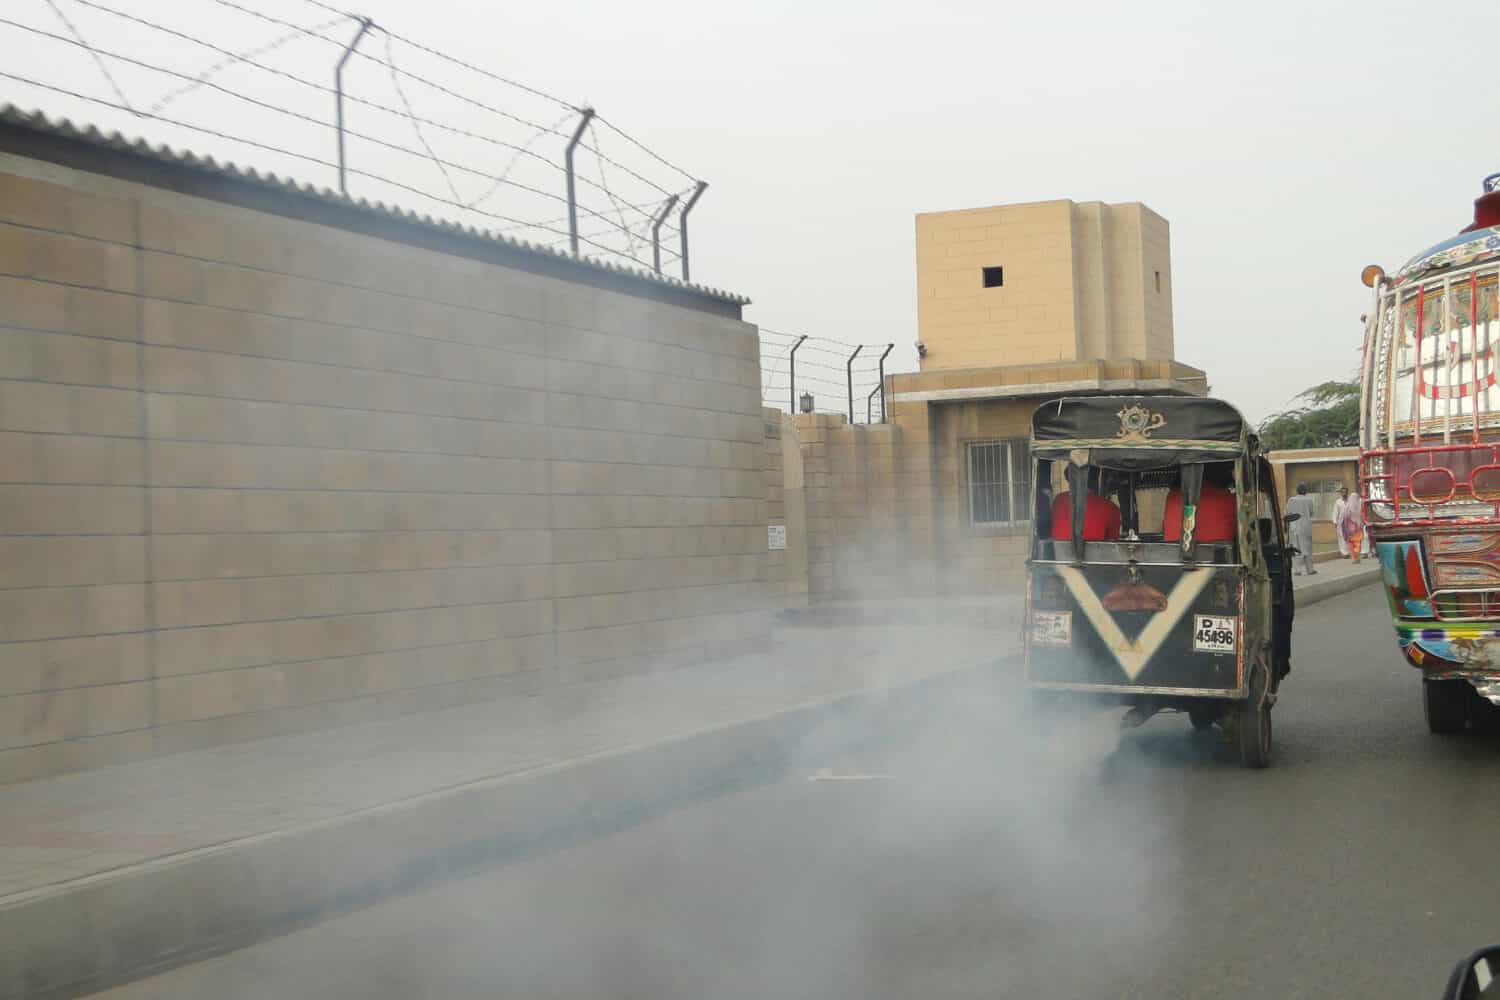                                rickshaw smog pollution